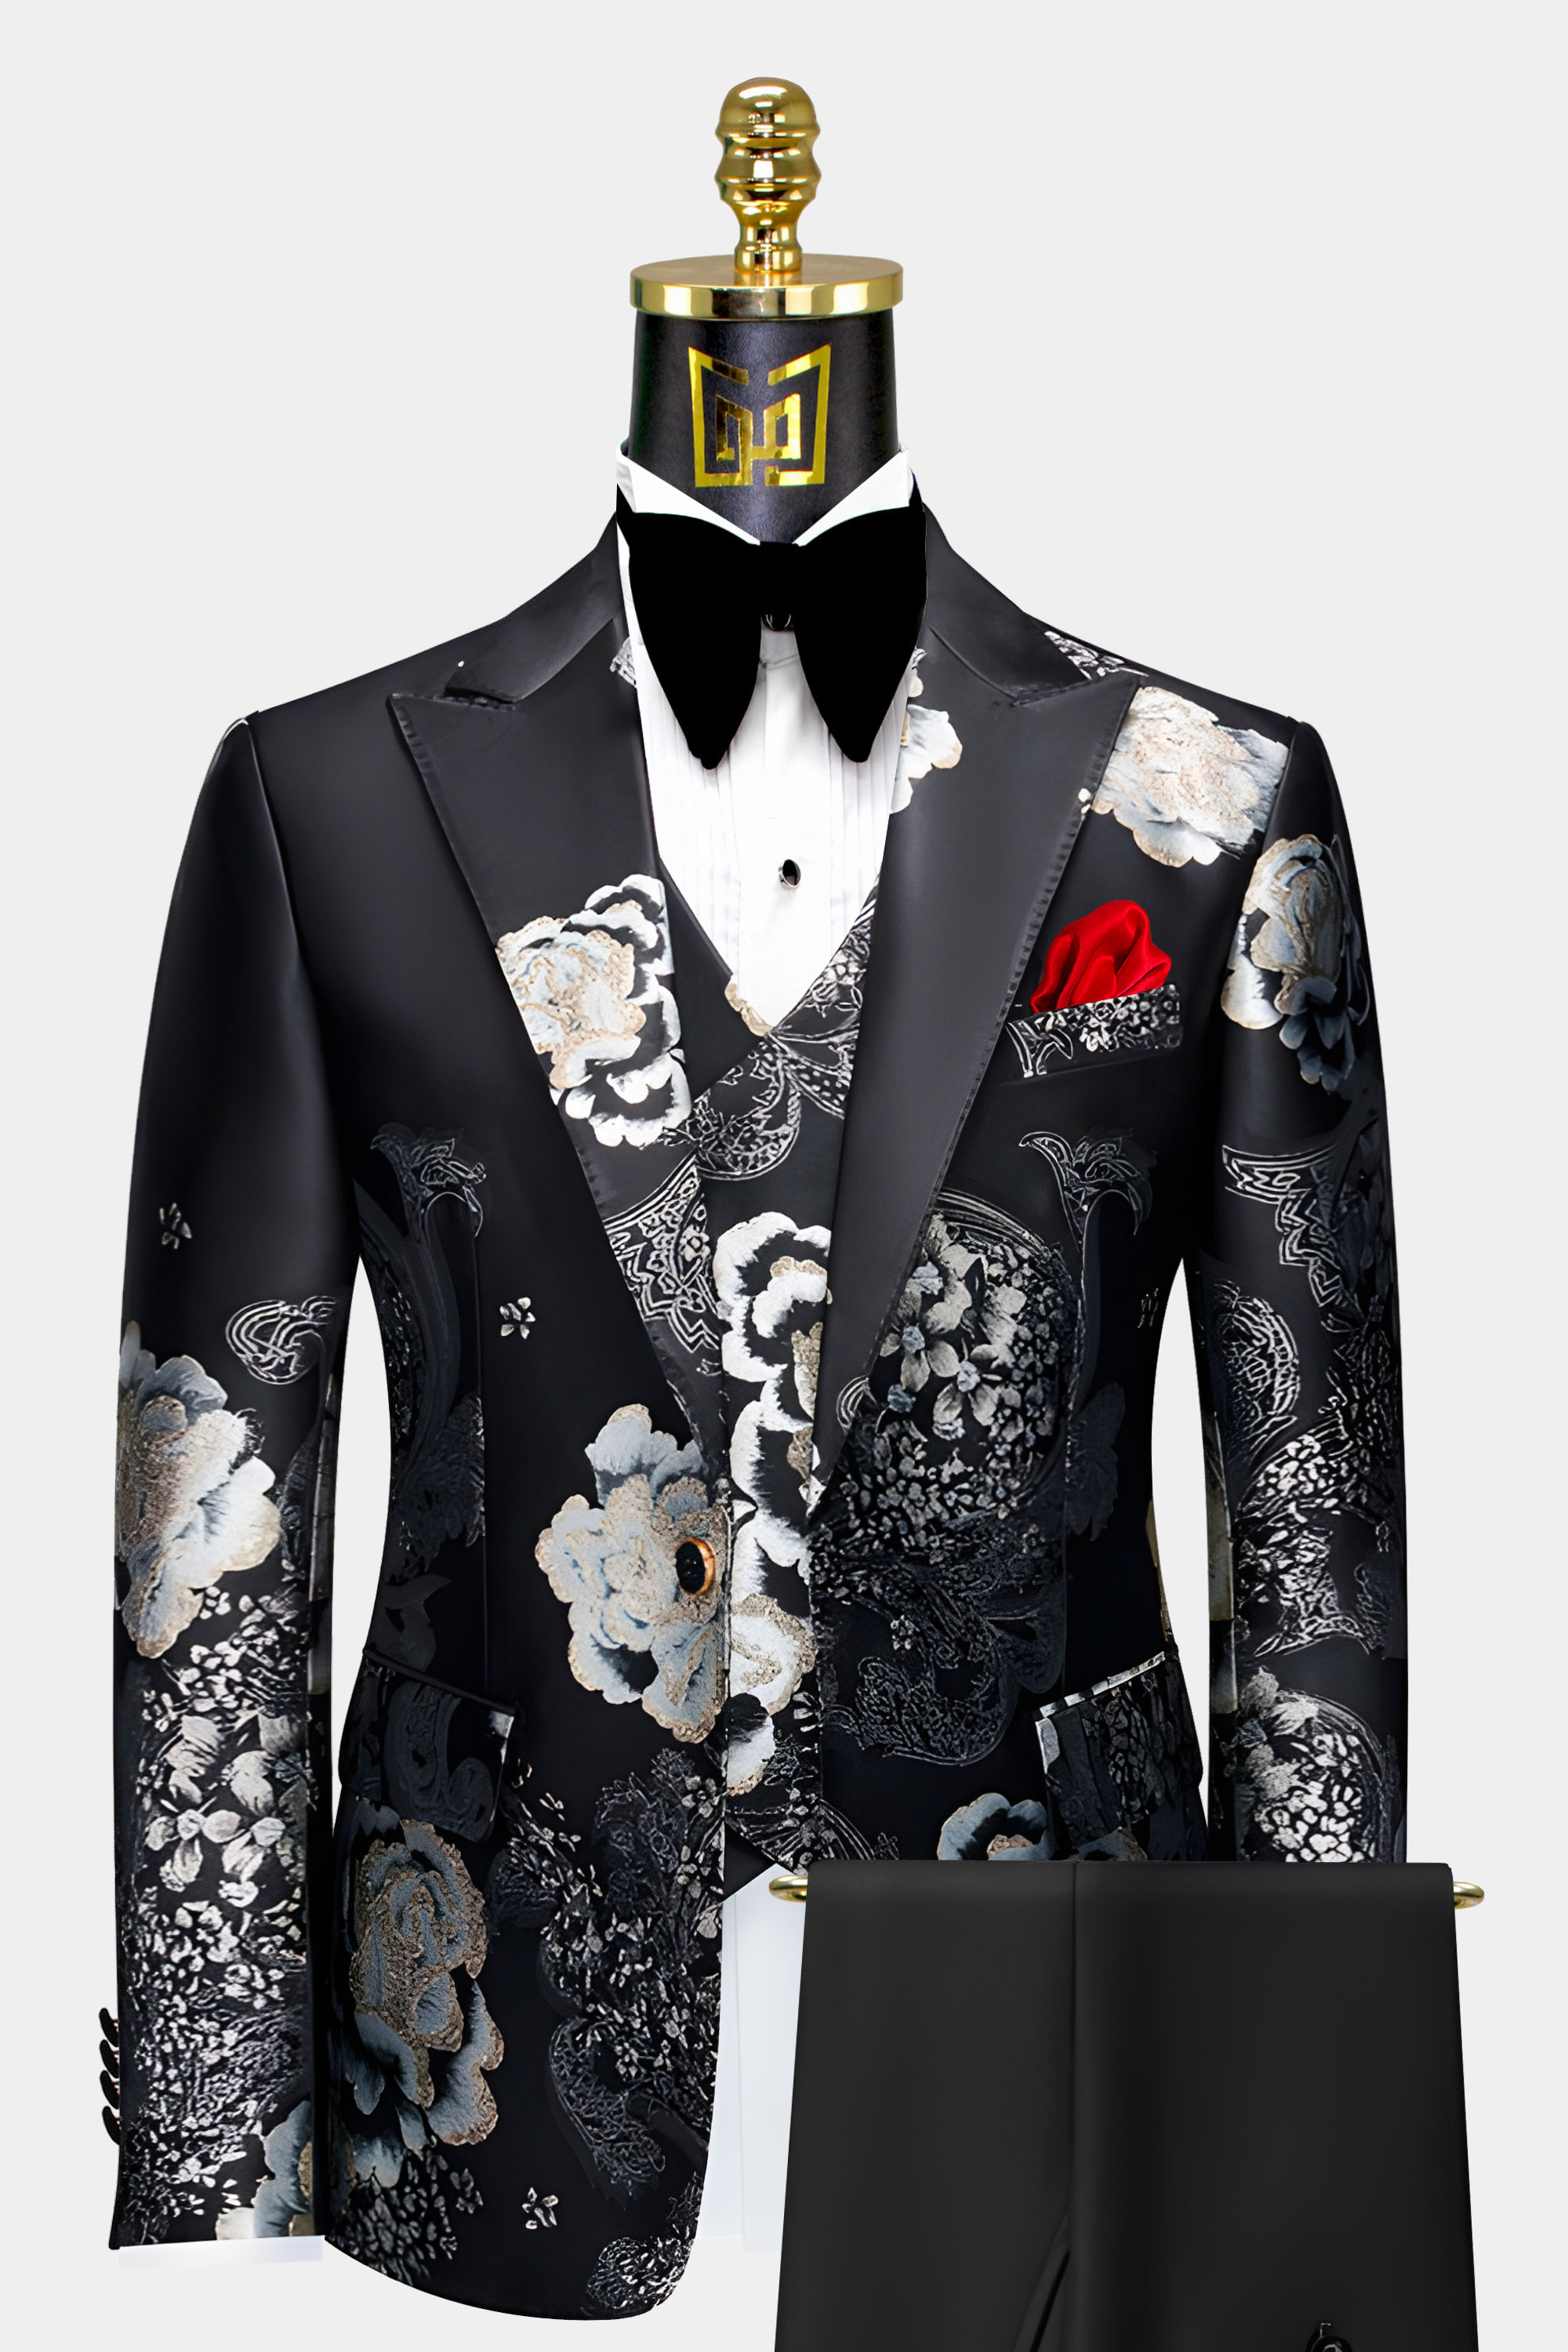 Black-Pant-Silver-and-Black-Suit-Prom-Groom-Wedding-Tuxedo-from-Gentlemansguru.com